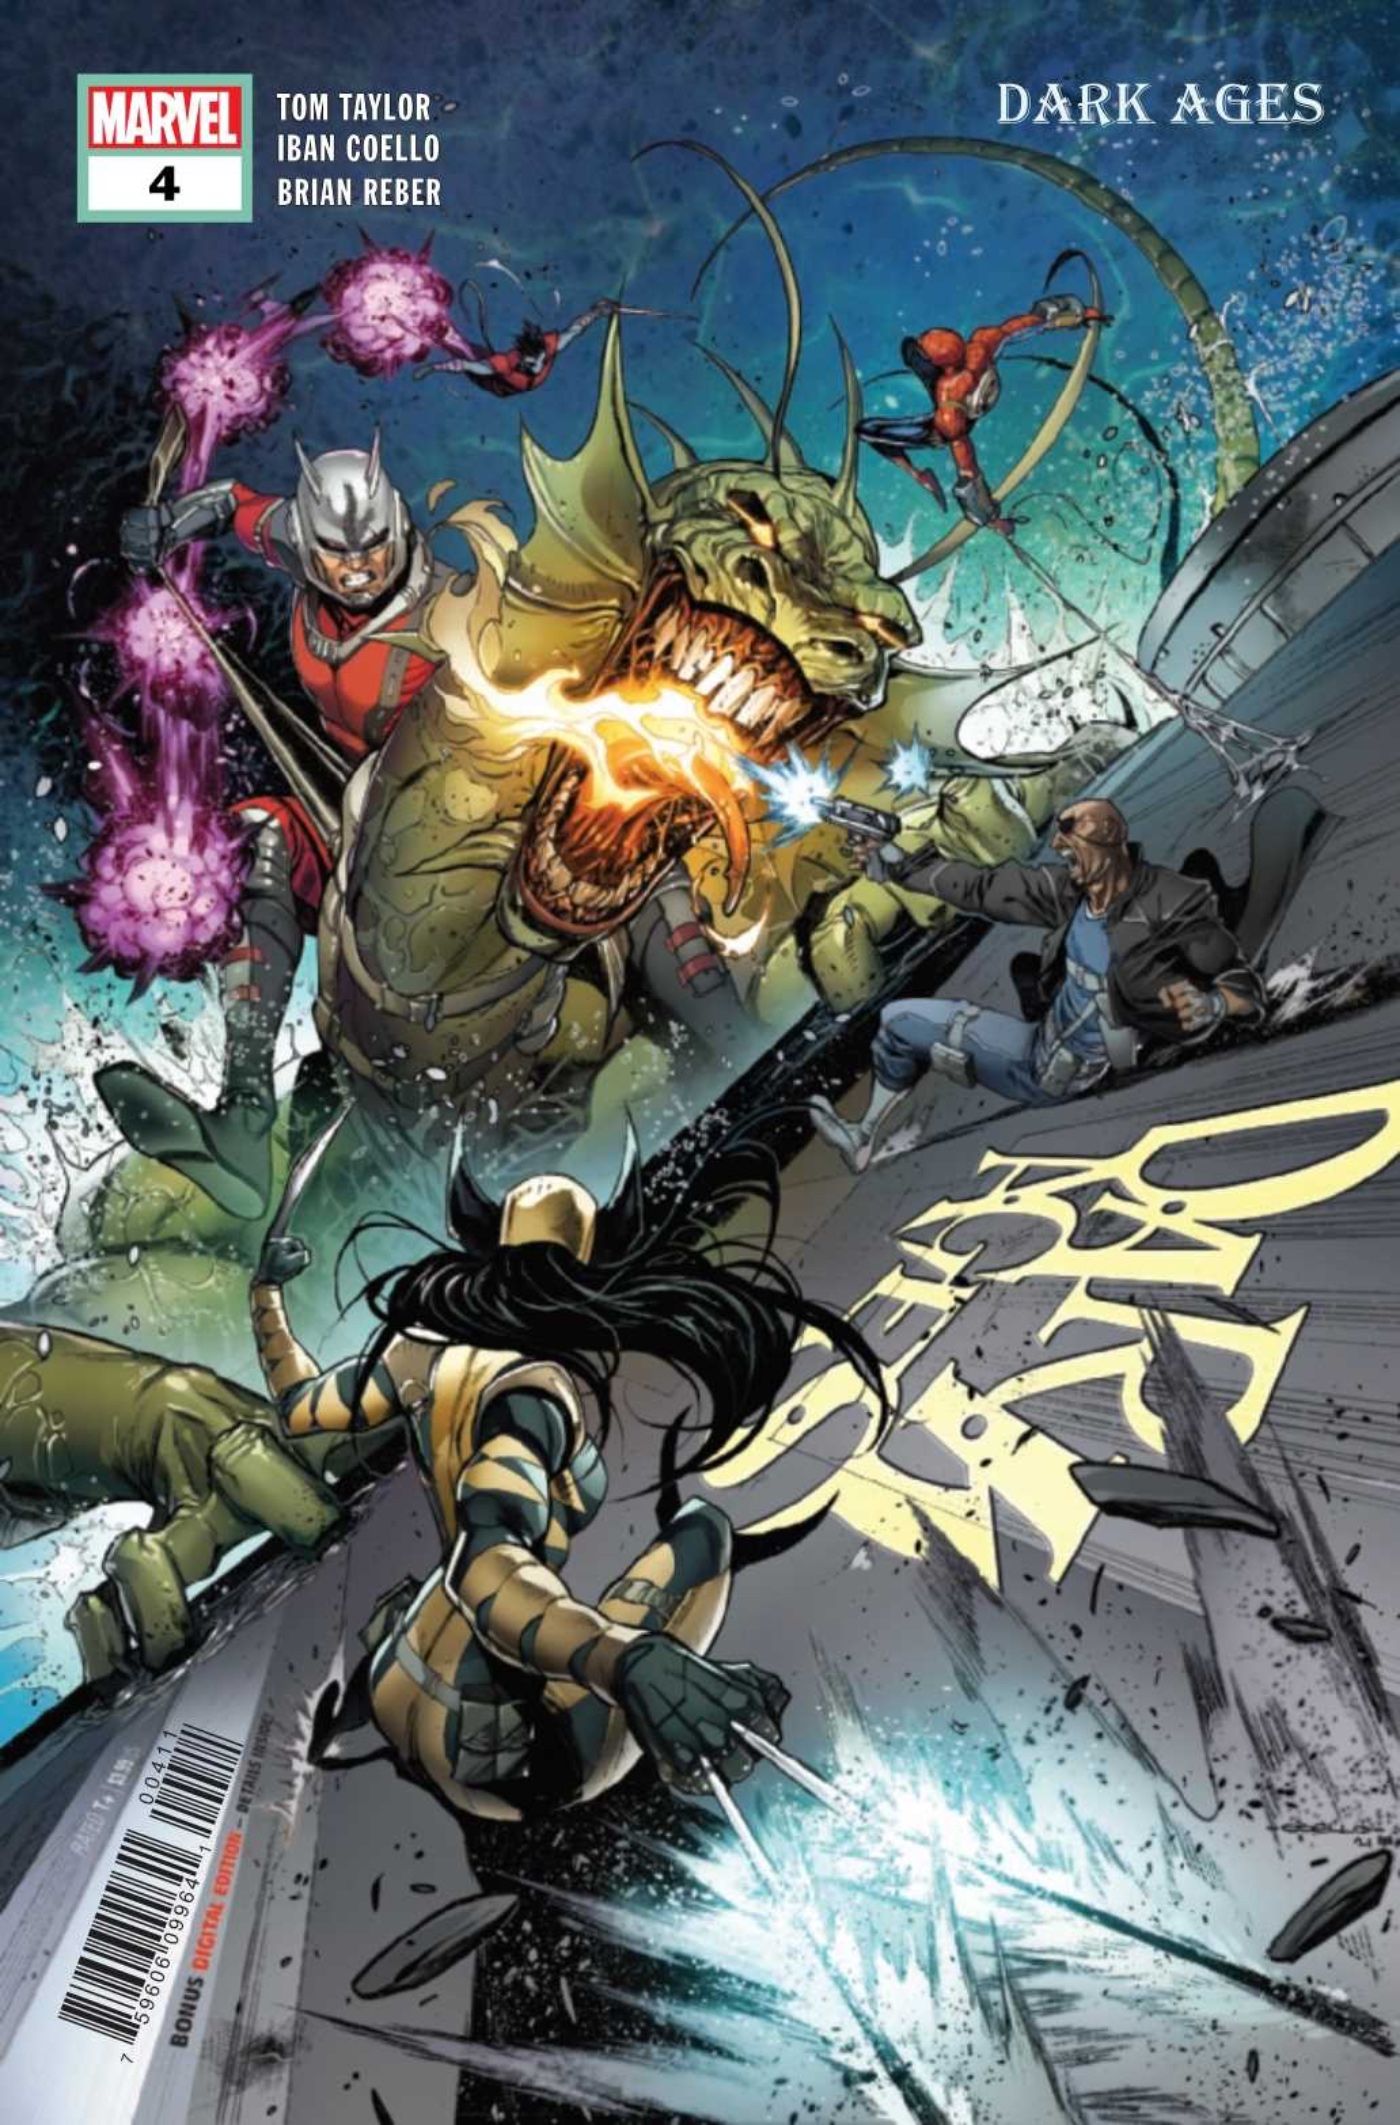 X-Men’s Nightcrawler Finally Realizes He’s a Badass in Dark Ages